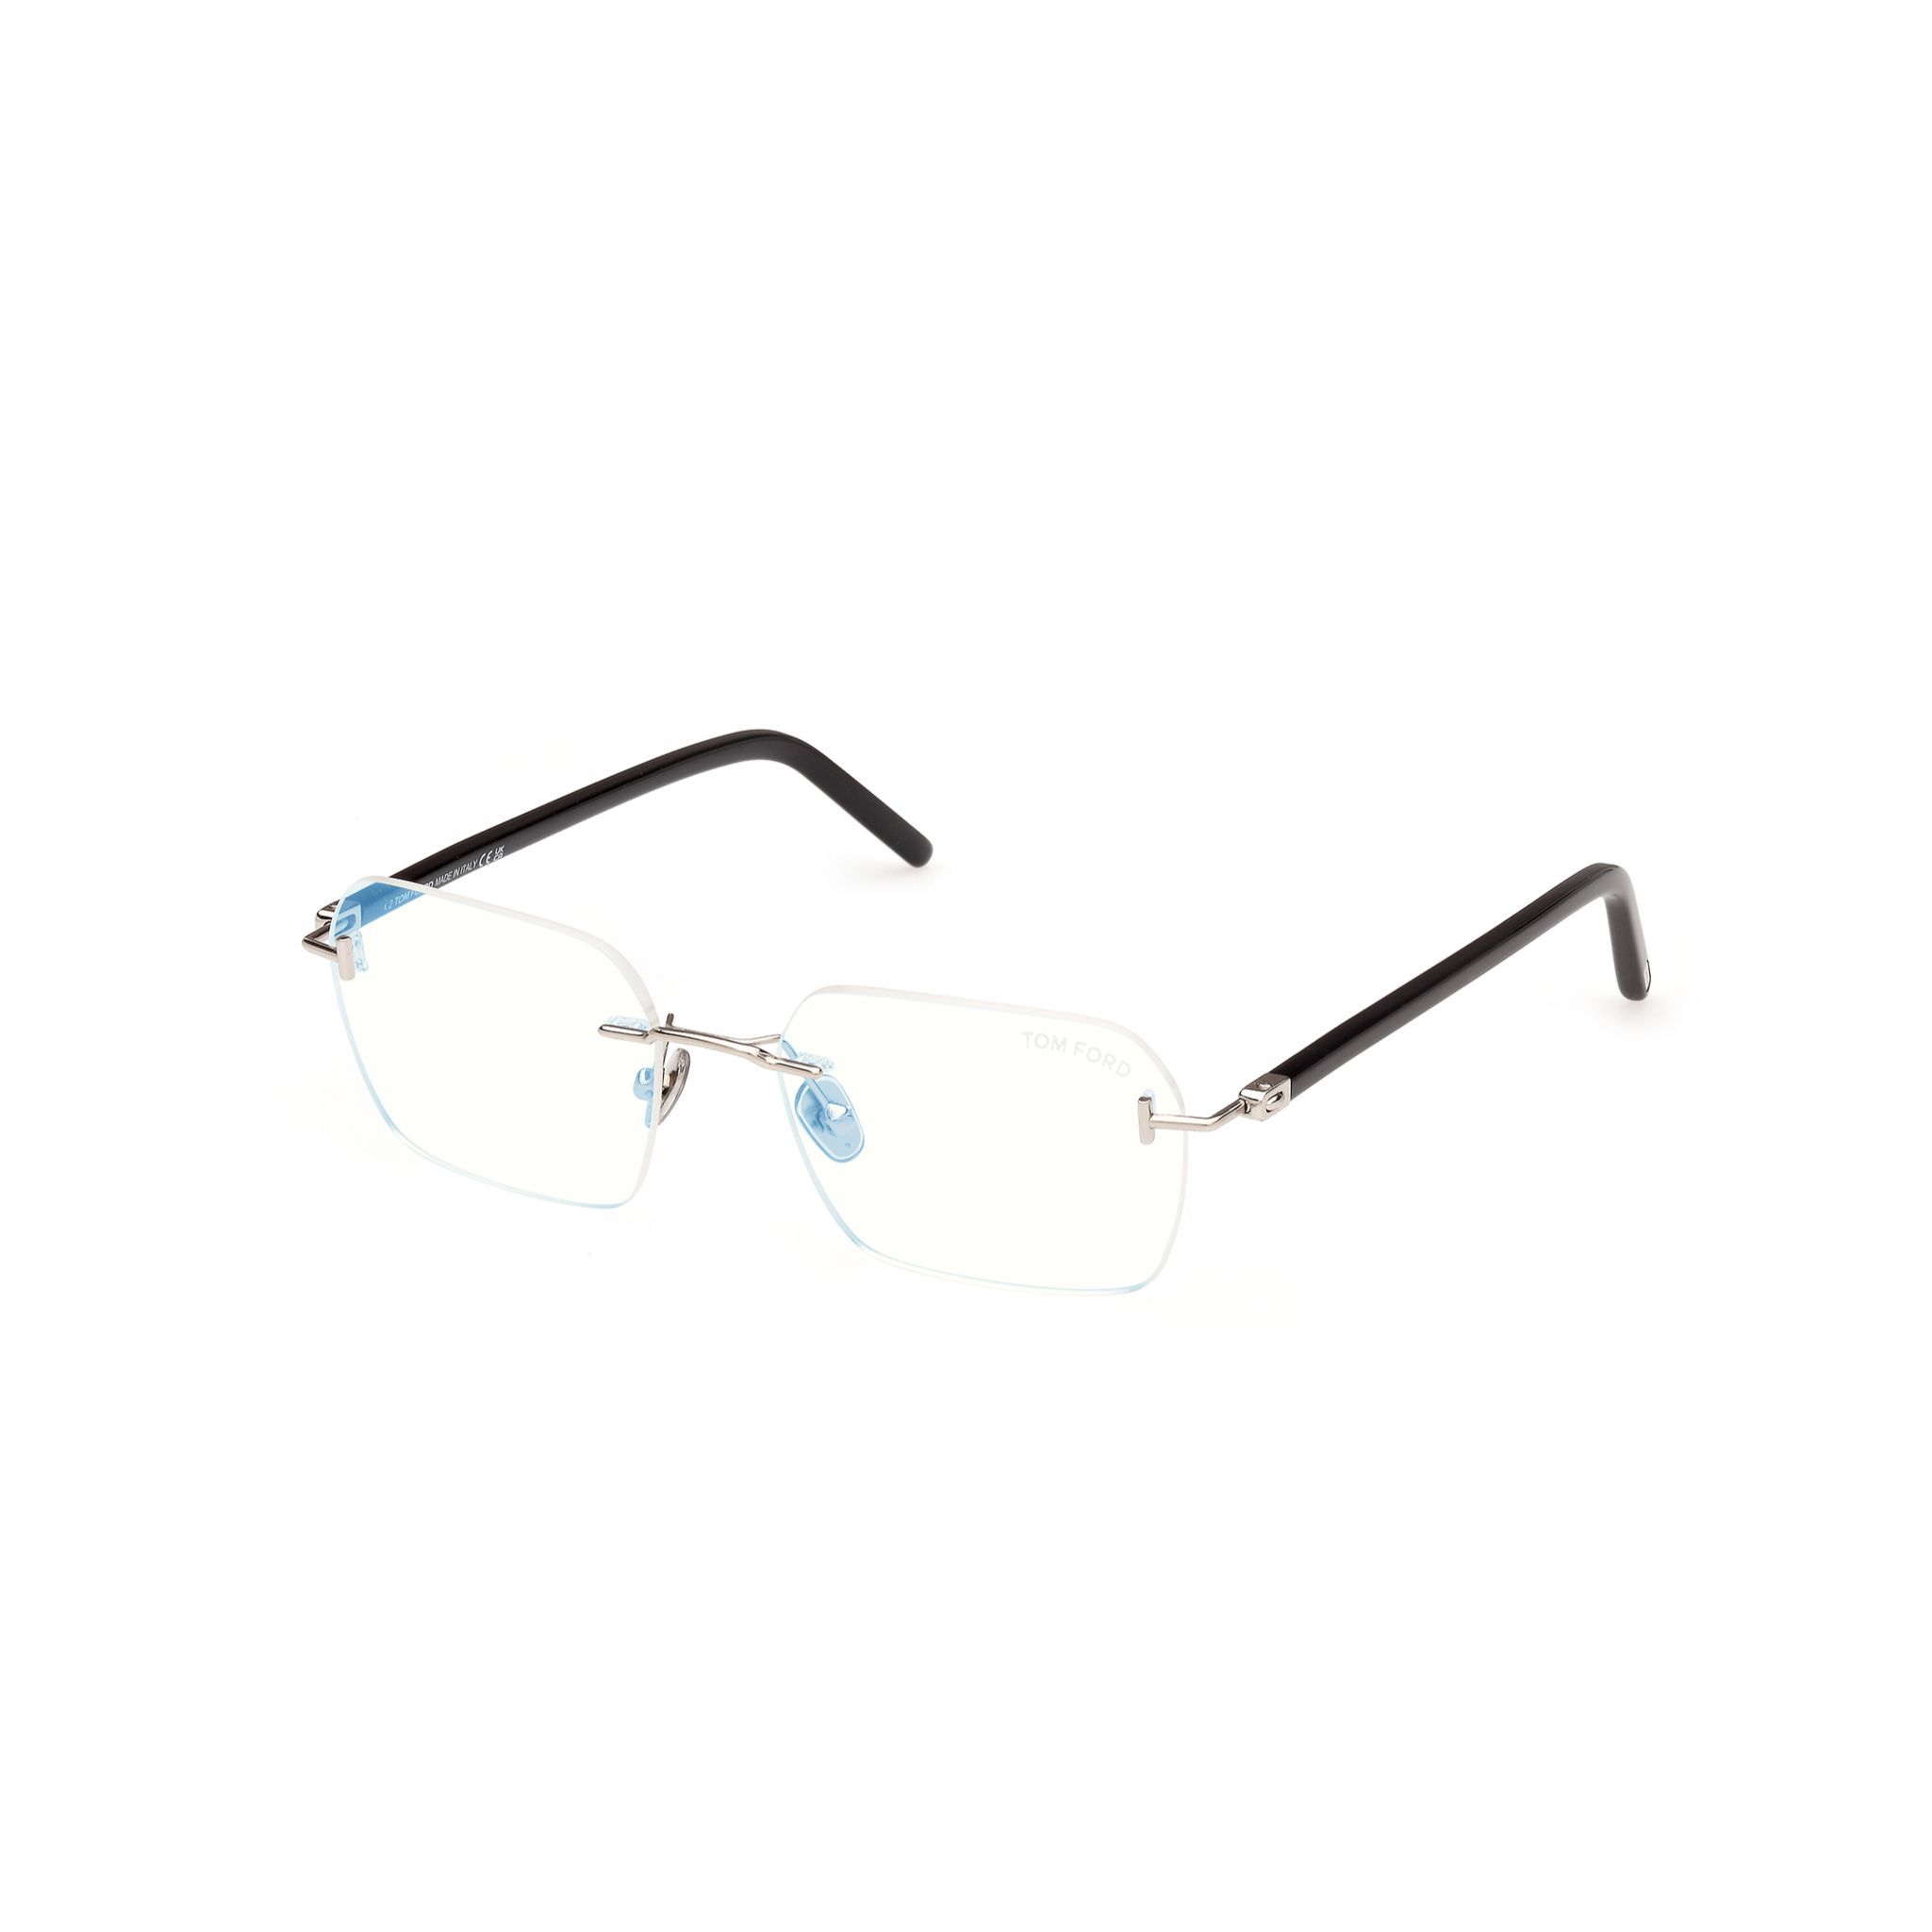 FT5934 Rectangle Eyeglasses 016 - size 54